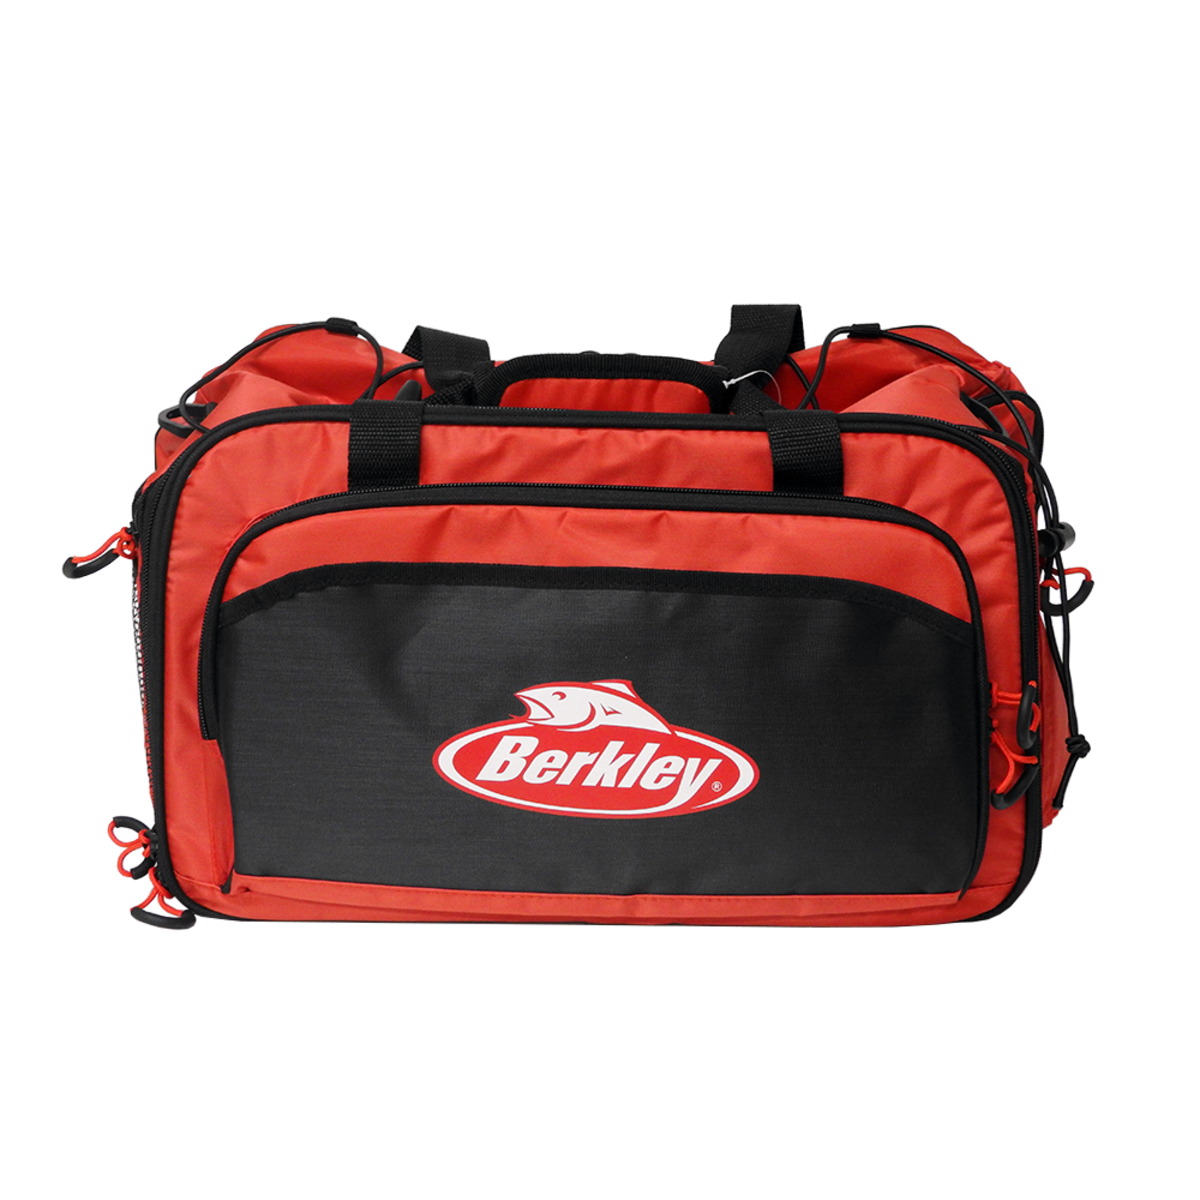 Berkley Large Size Tackle Bag